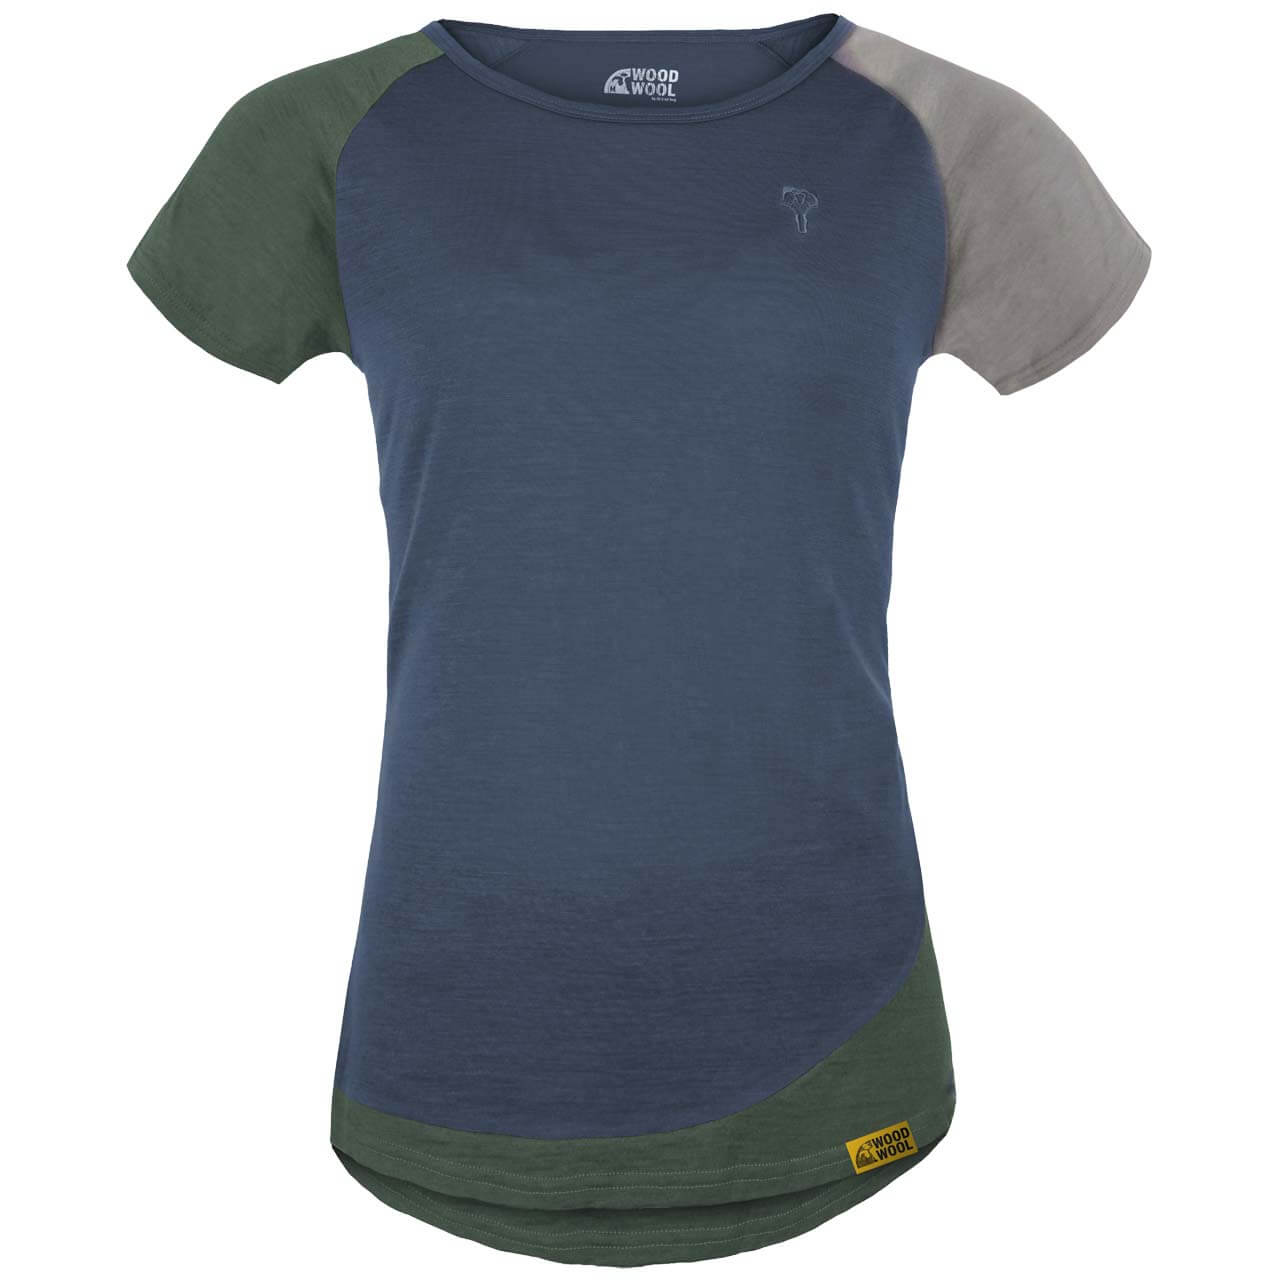 Grüezi Bag WoodWool Janeway T-Shirt - Ocean Cavern, XS von Grüezi Bag}